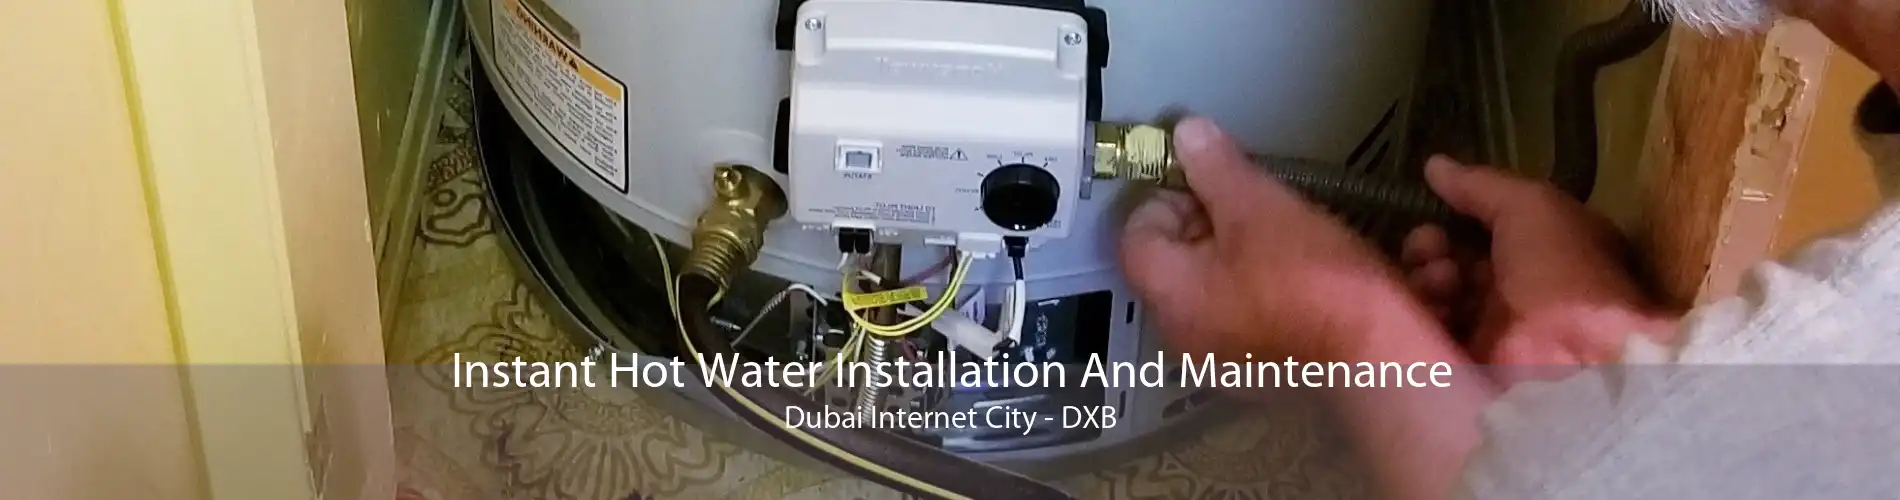 Instant Hot Water Installation And Maintenance Dubai Internet City - DXB